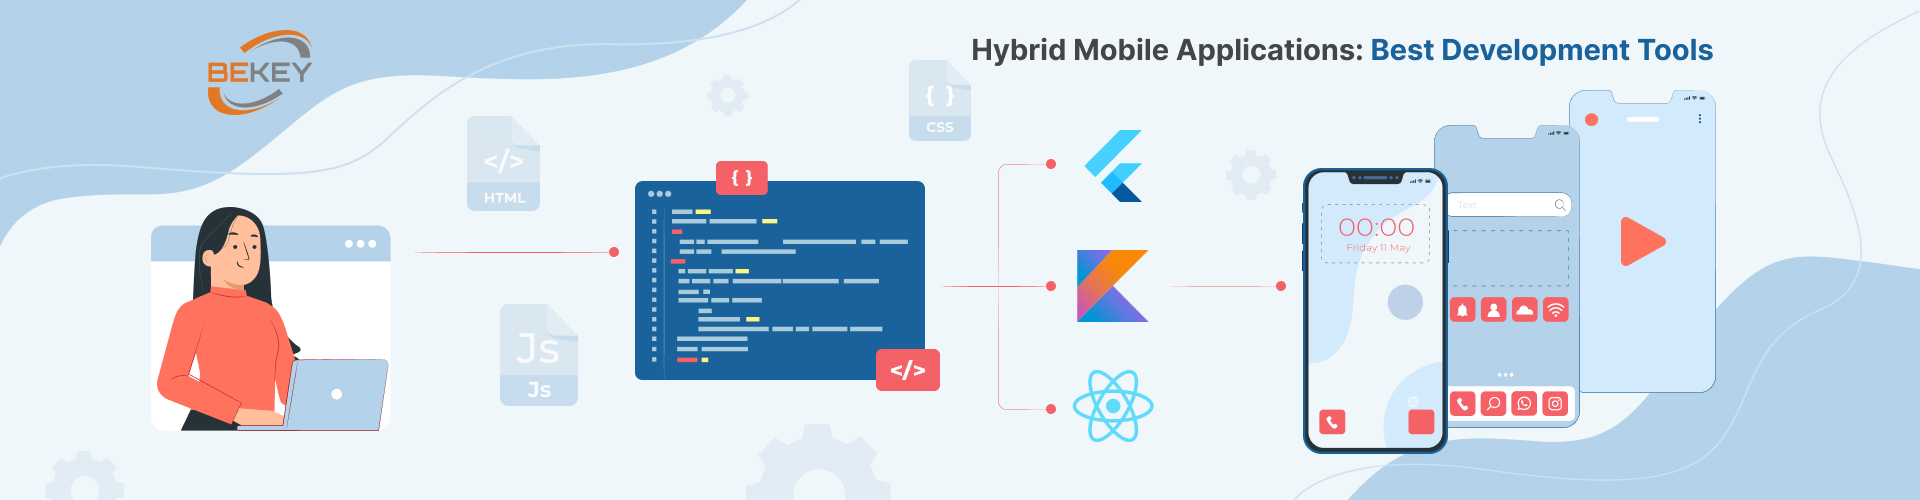 Hybrid Mobile Applications: Best Development Tools - image